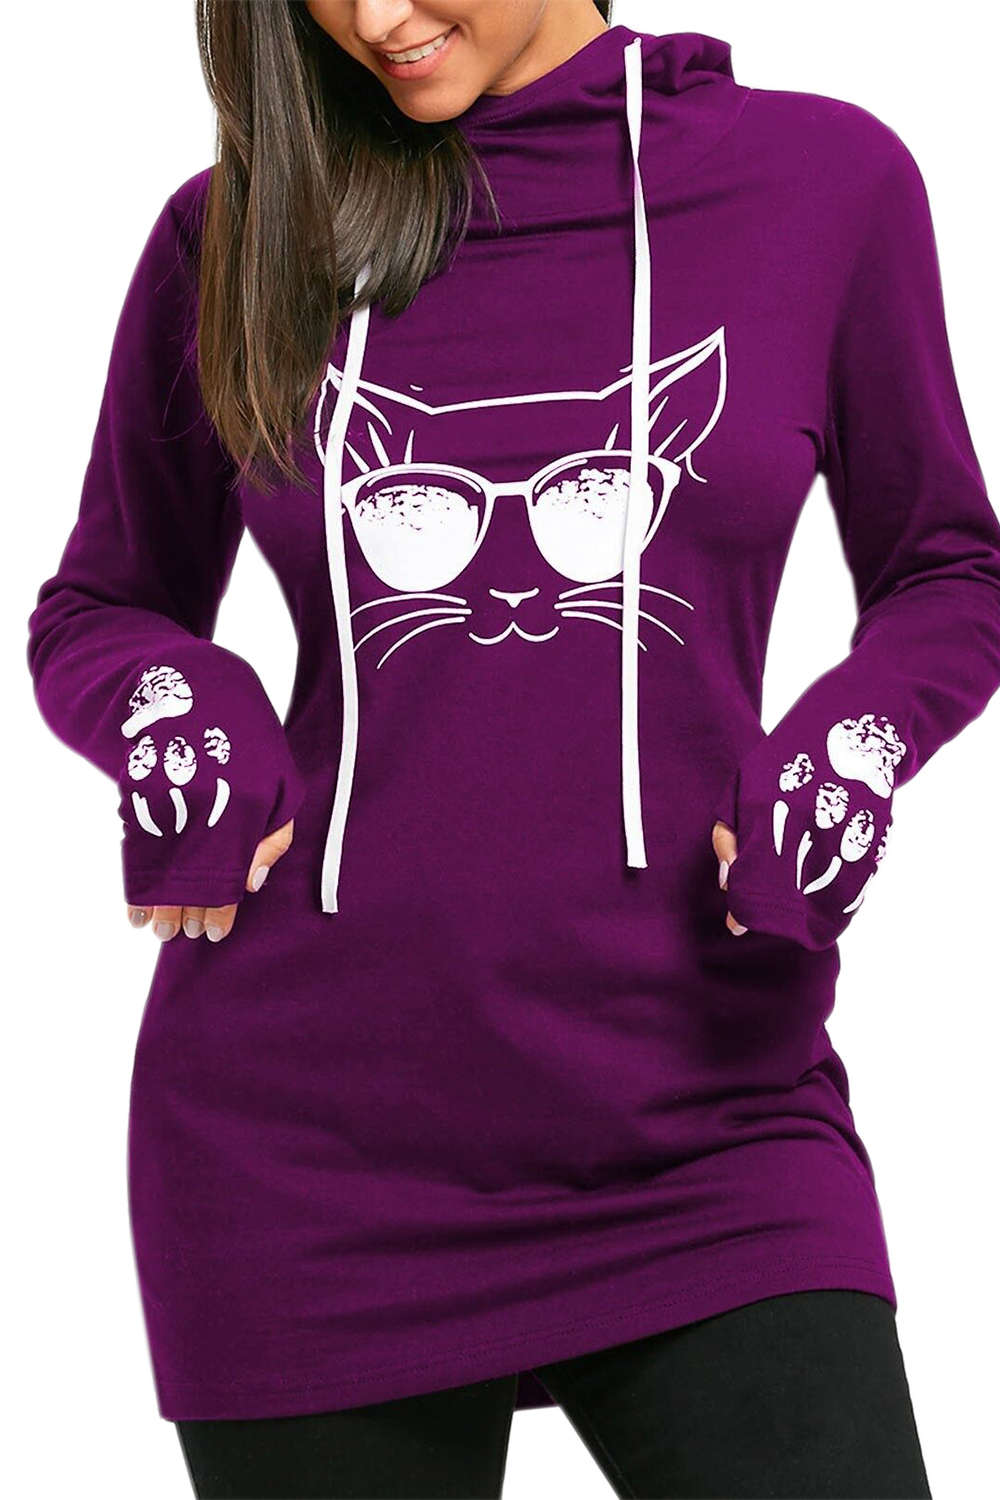 Iyasson Womens Cute Long Sleeve Hooded Sweatshirt Cat Face Paw Printing Pullover Hoodie